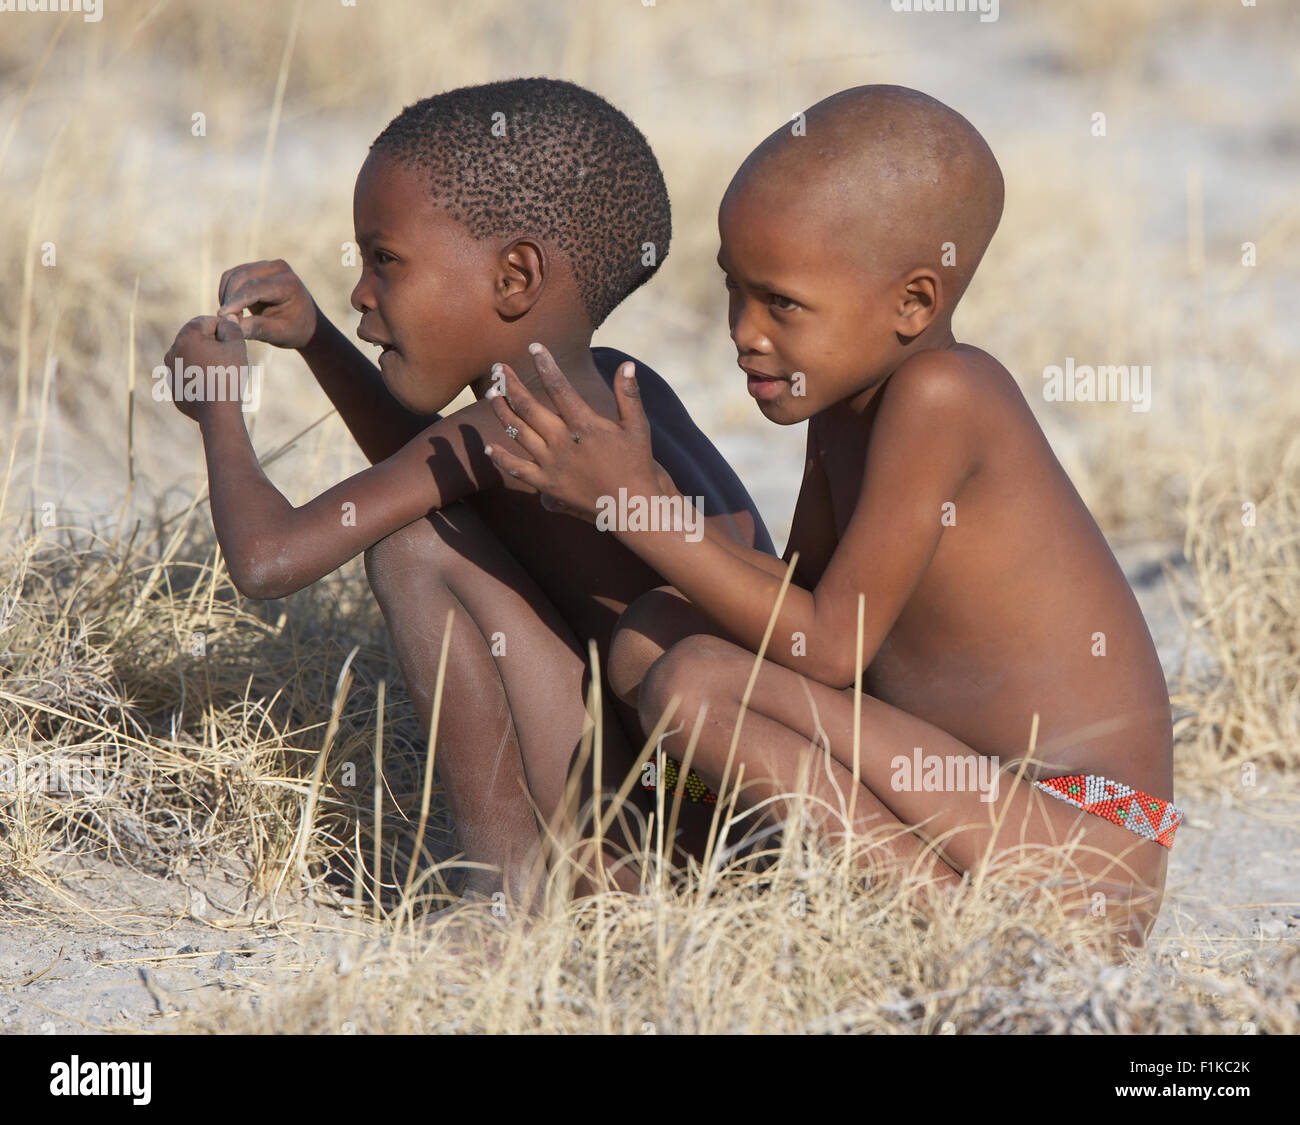 Bushman children Stock Photo